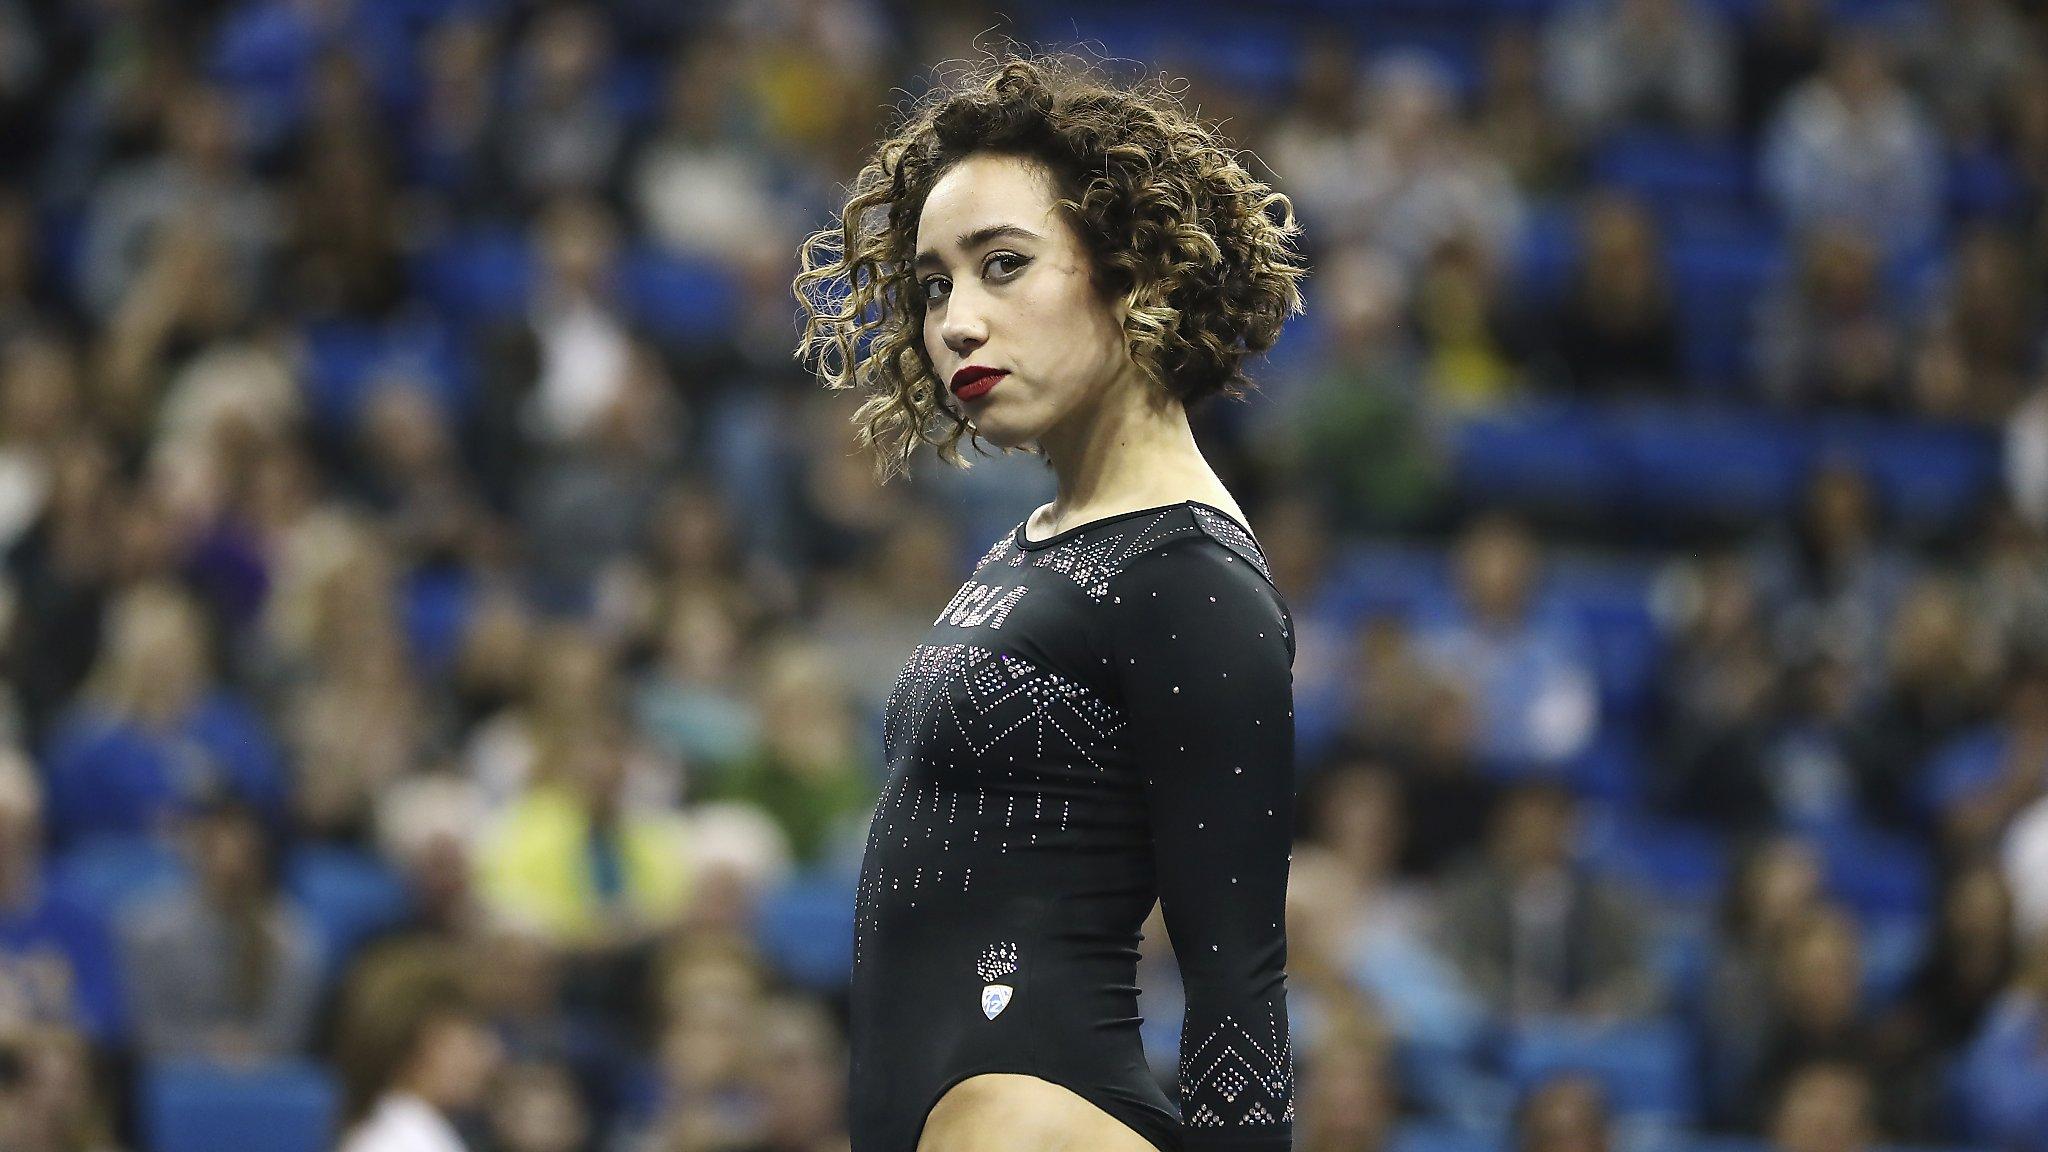 A 10 isn't enough': UCLA gymnast's flawless floor routine breaks